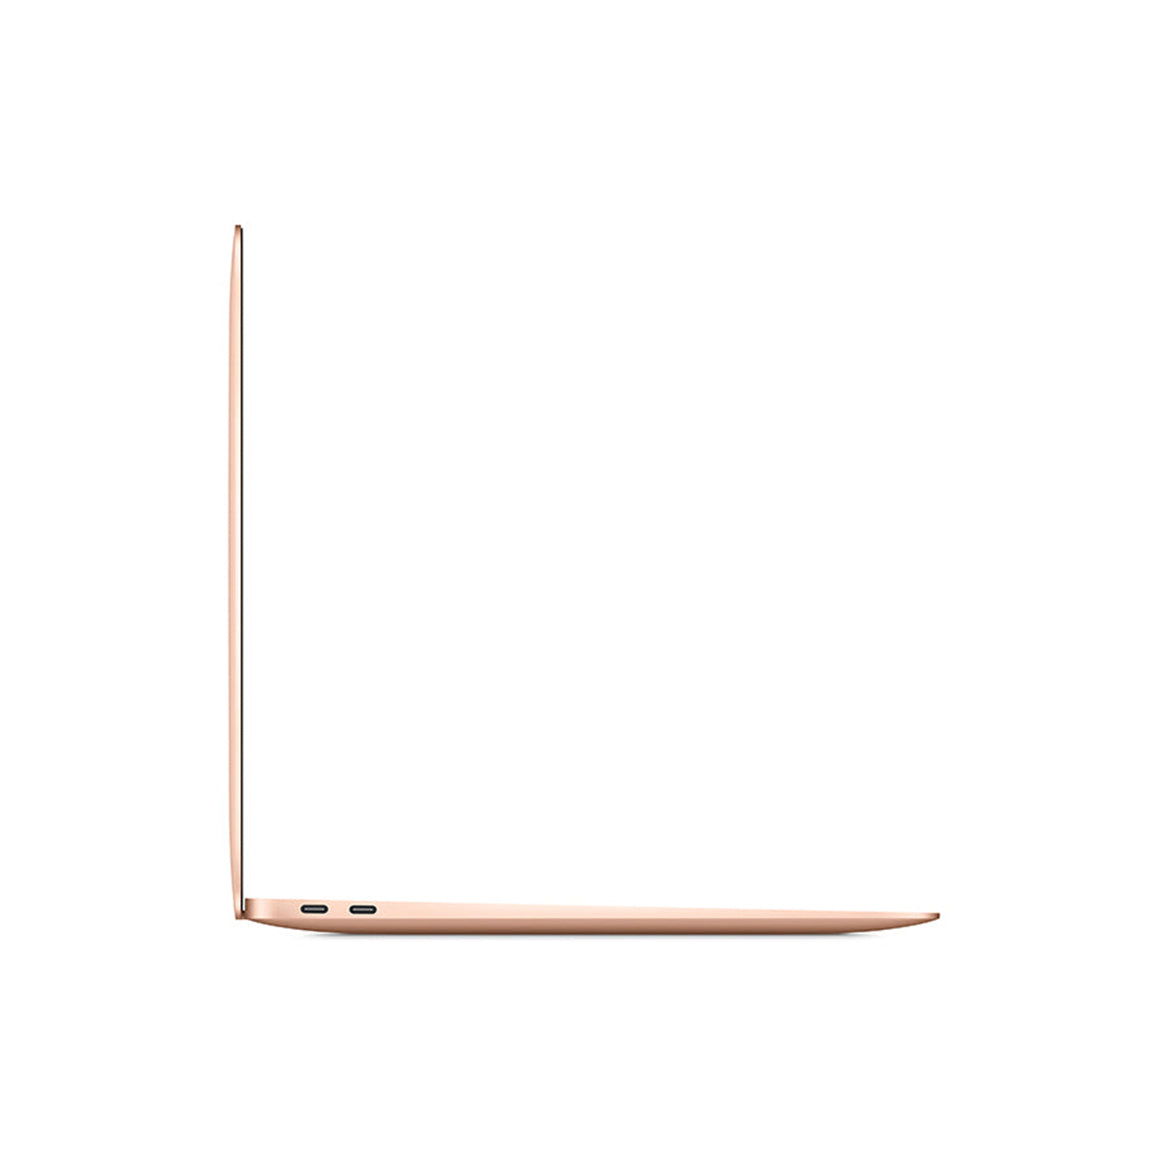 MacBook Air M1 2020 gold side view